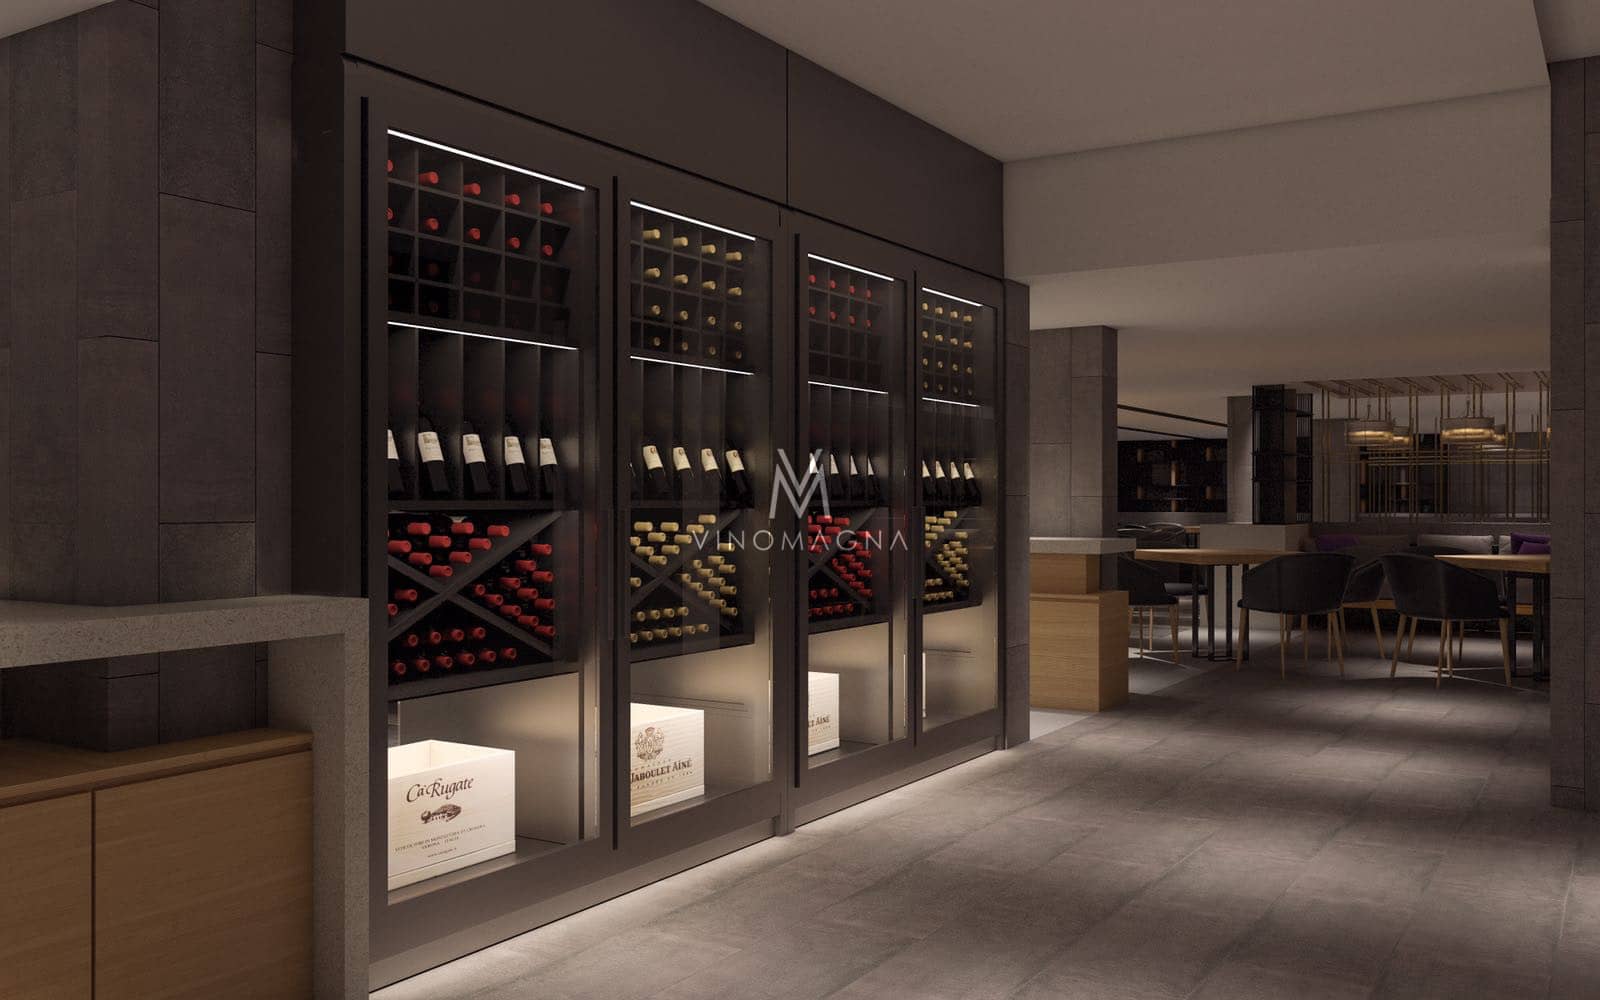 custom restaurant wine display vinomagna